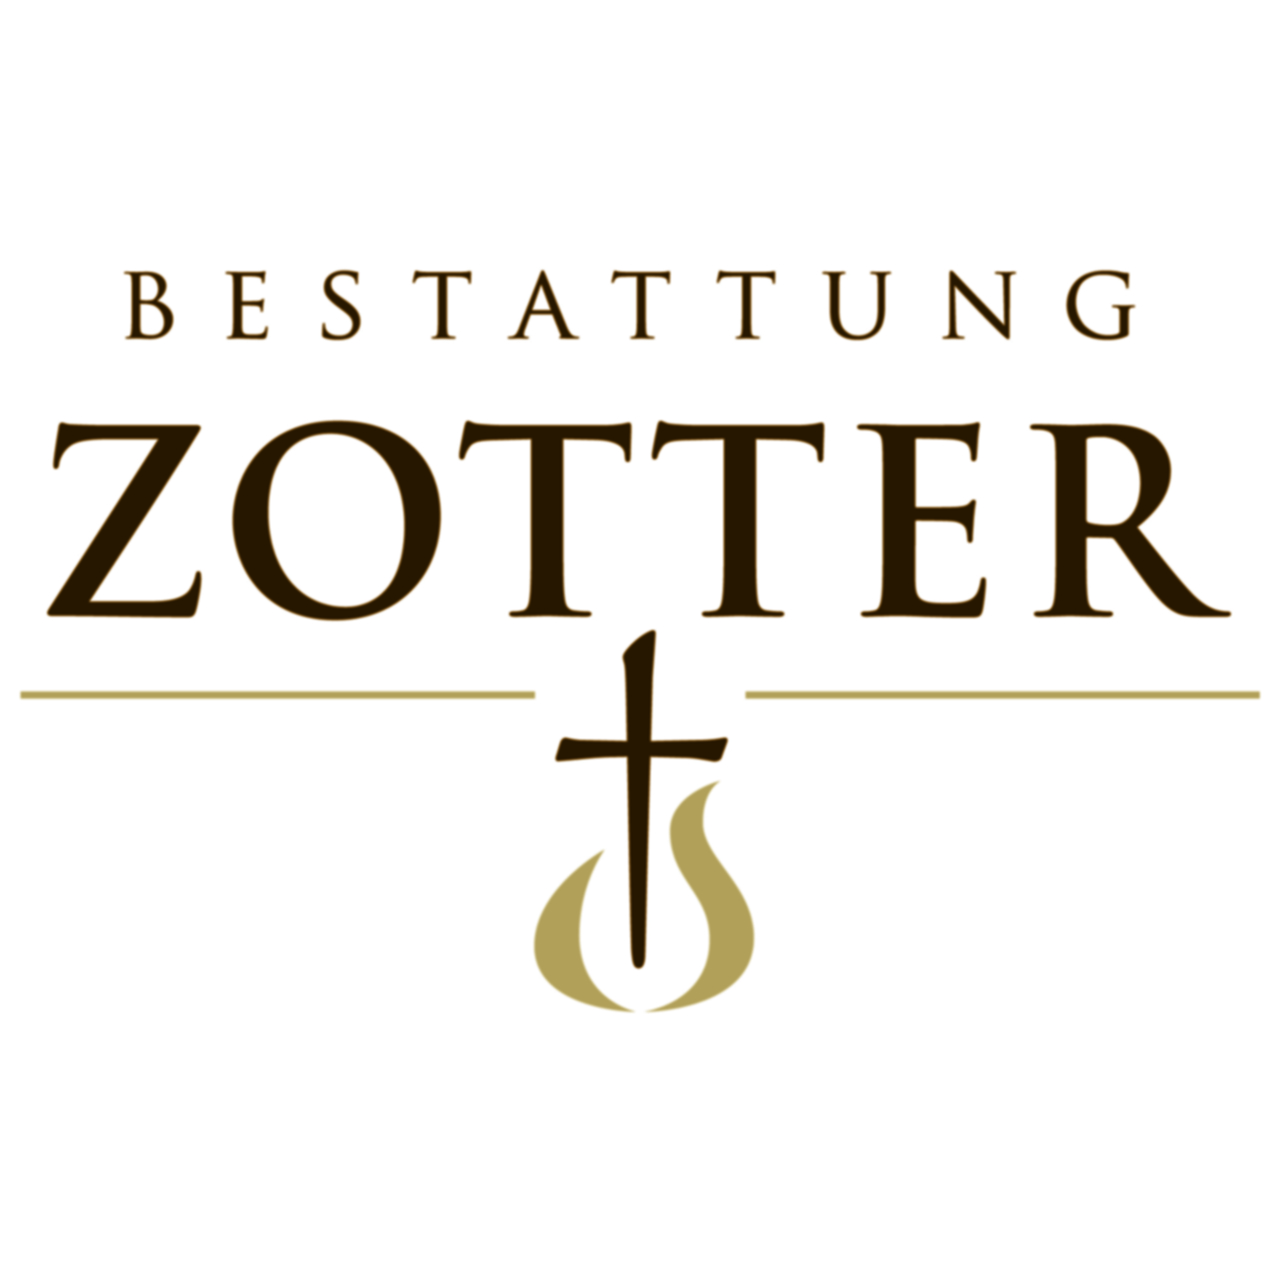 logos/Bestattung Zotter Logo kleiner100.jpg Logo